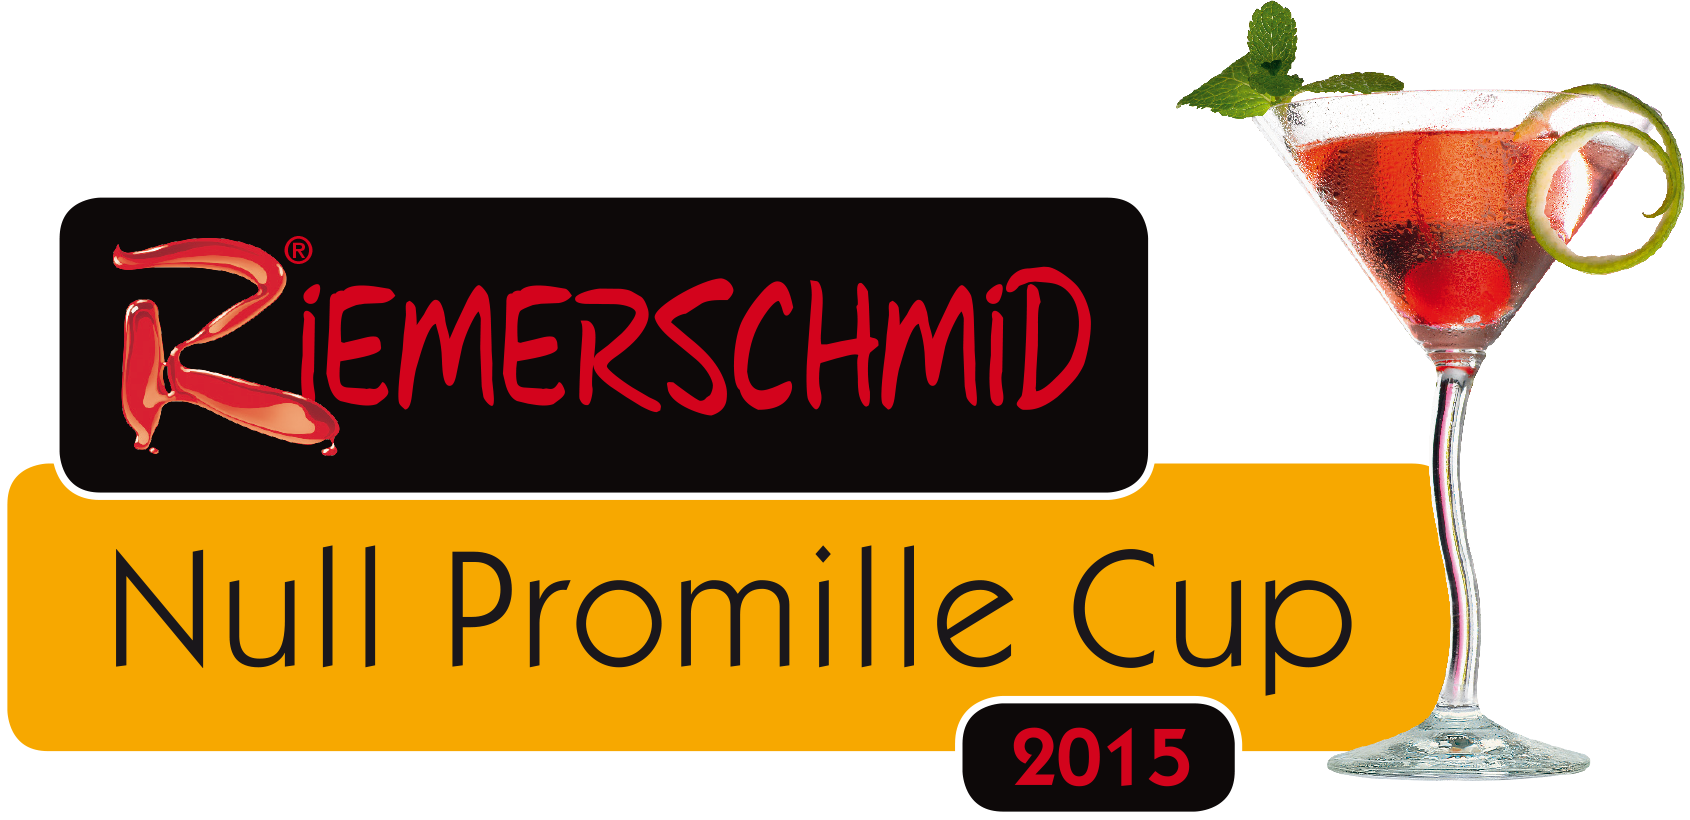 Riemerschmid Null Promille Cup 2015 - GETRAENKEABC.DE